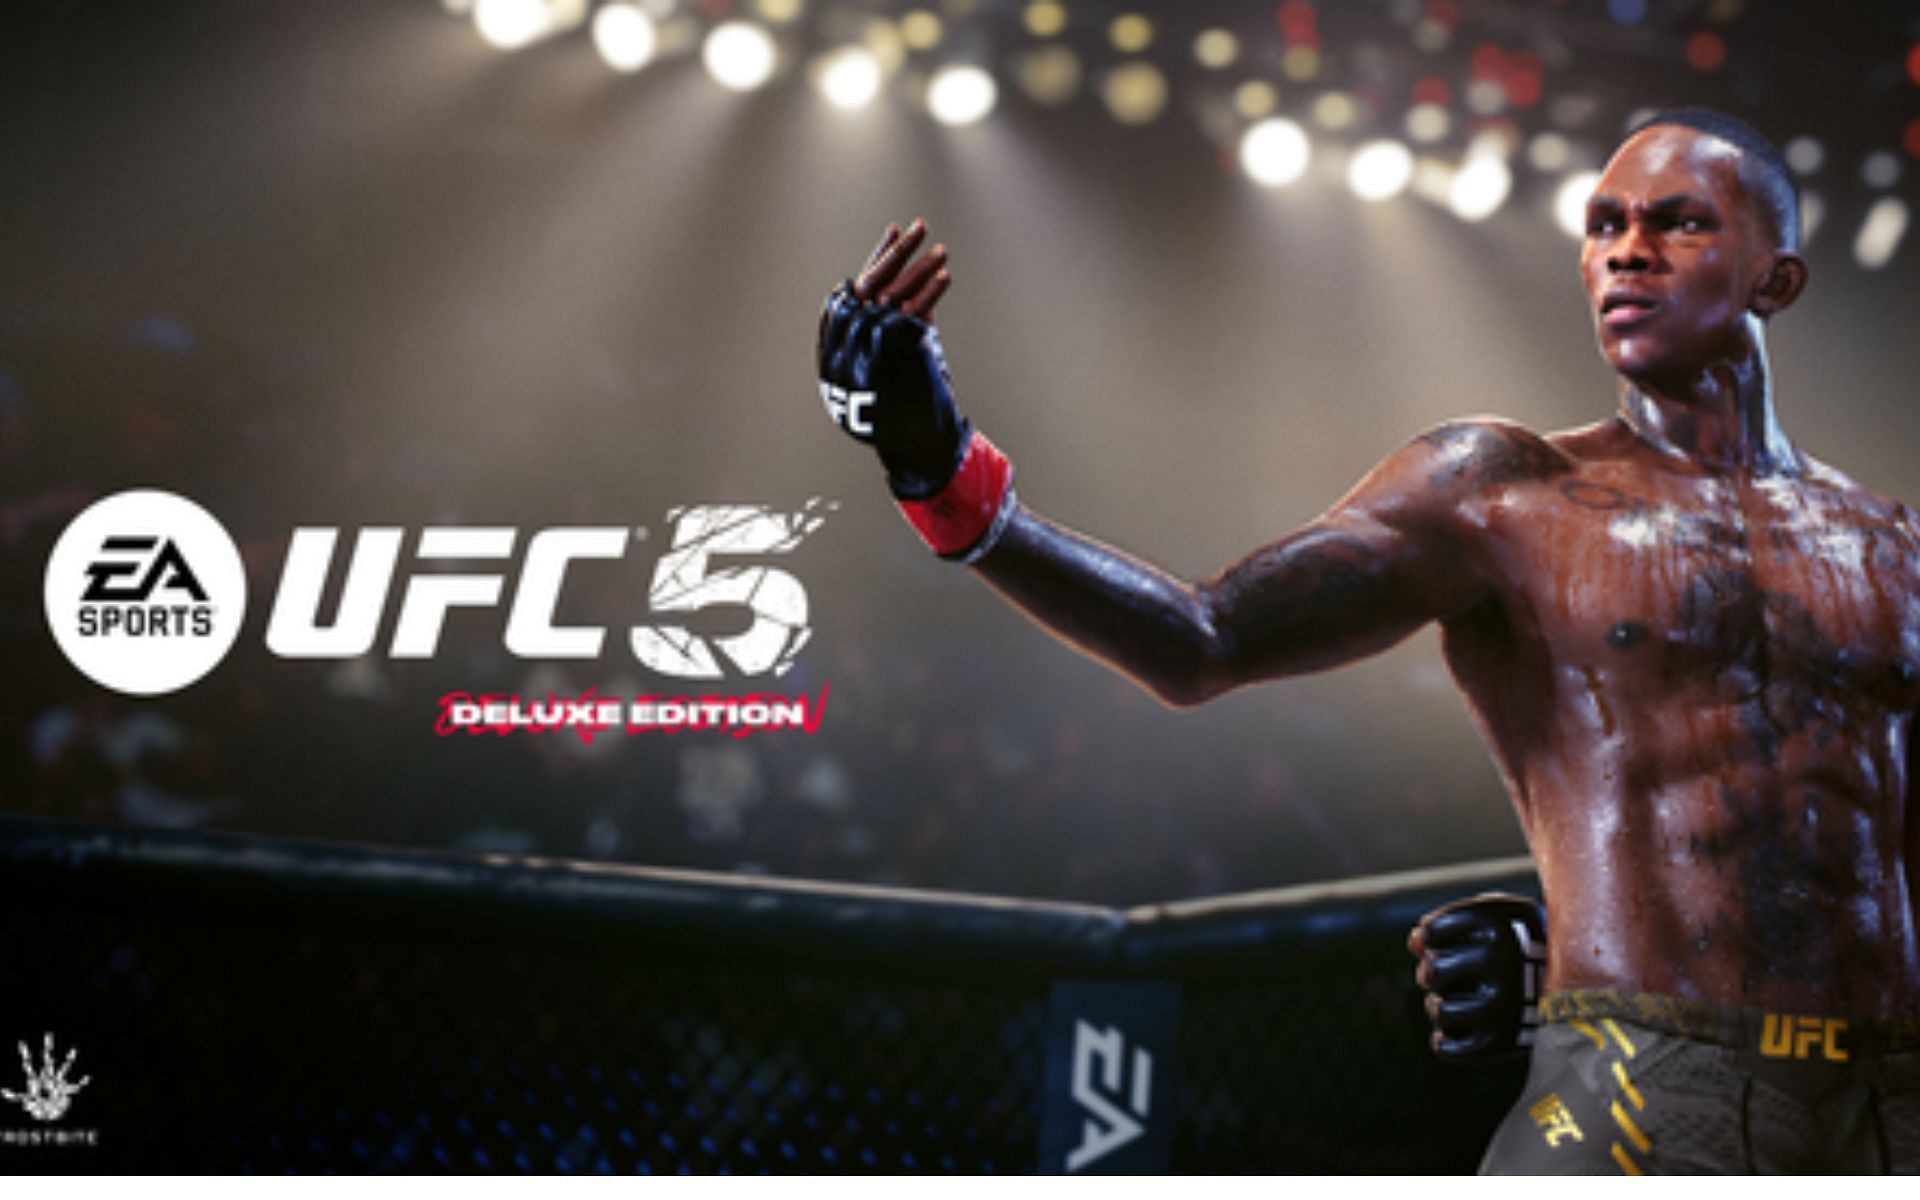 EA Sports UFC 5 Deluxe Edition cover [Photo credit: EA.com]